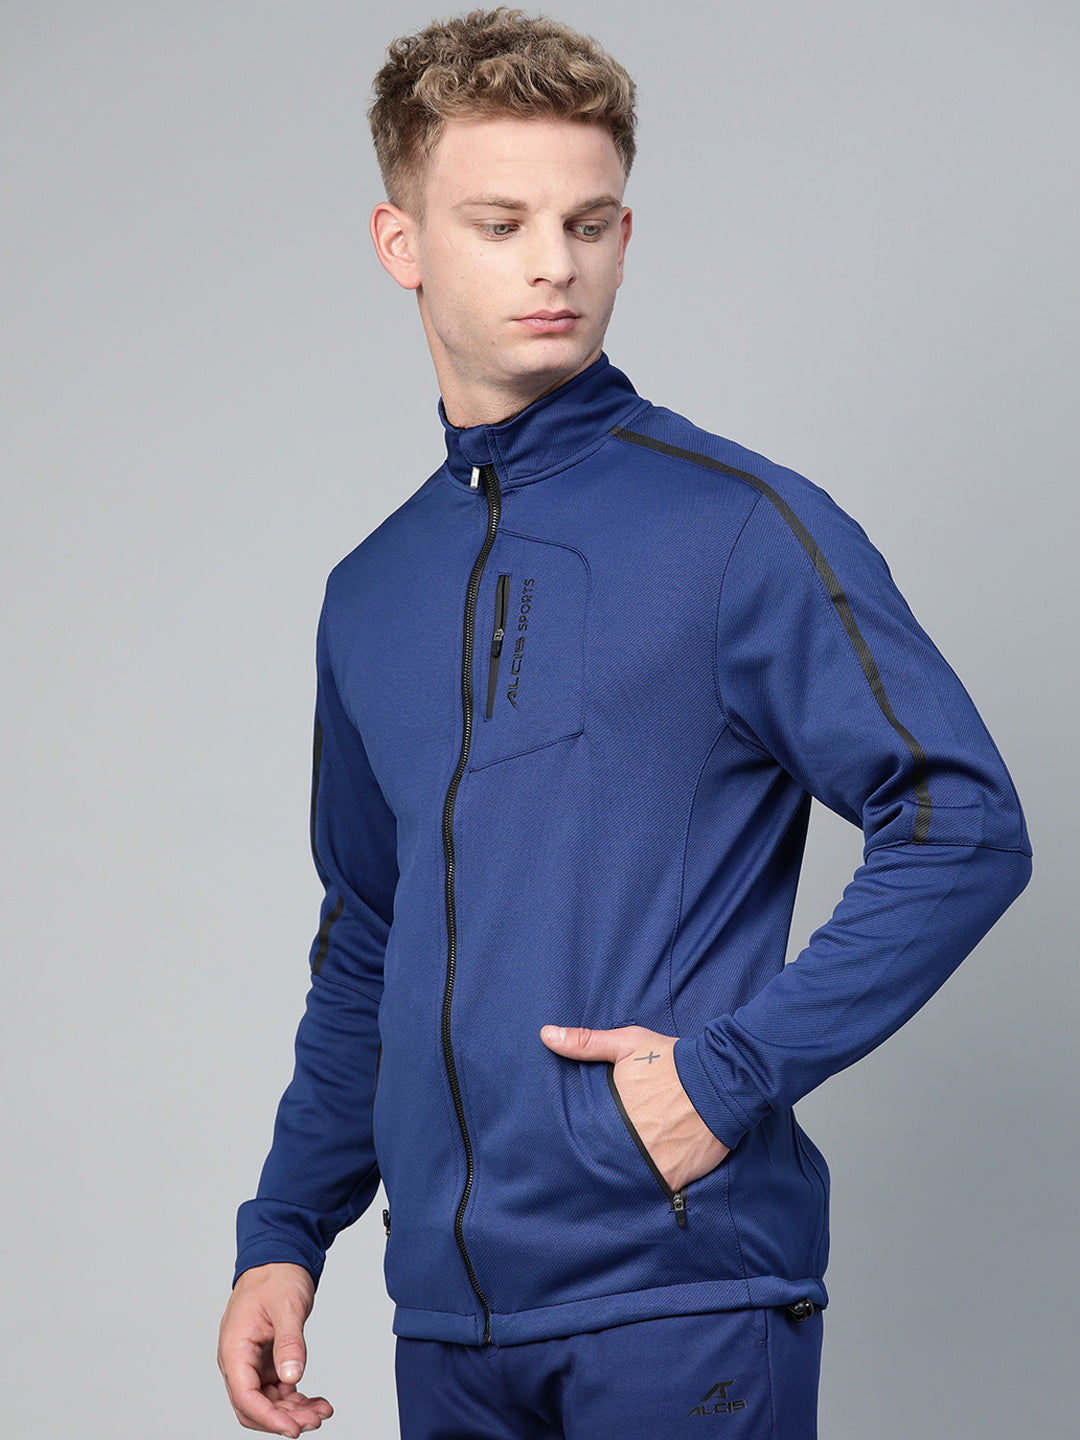 Alcis Men Blue Solid Sports Jacket